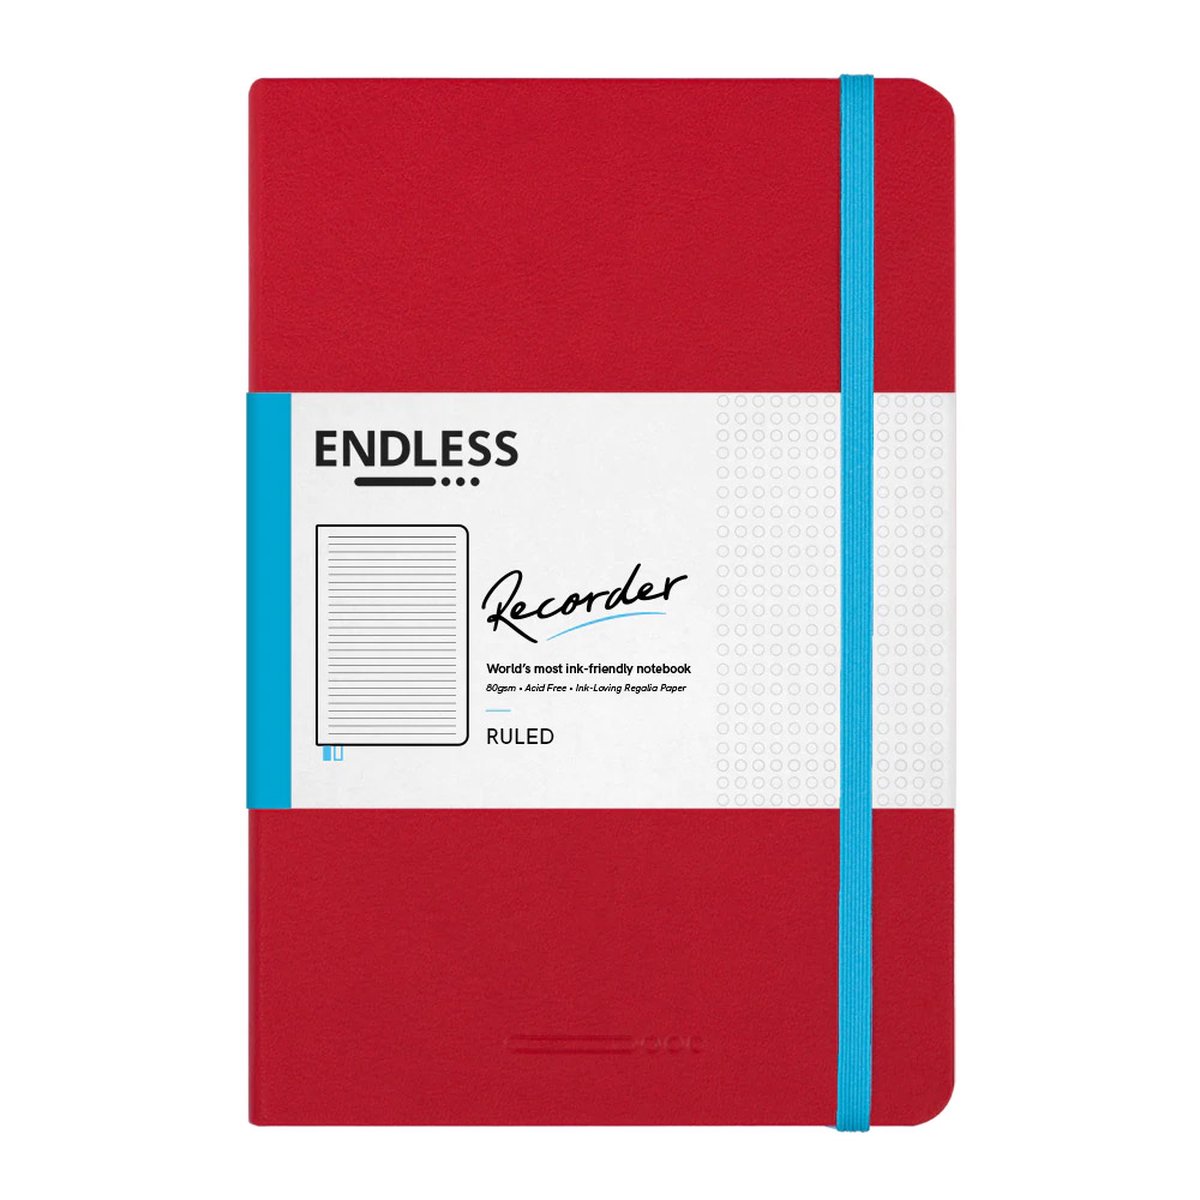 Endless Recorder Notebook Crimson Sky Regalia Paper - Ruled